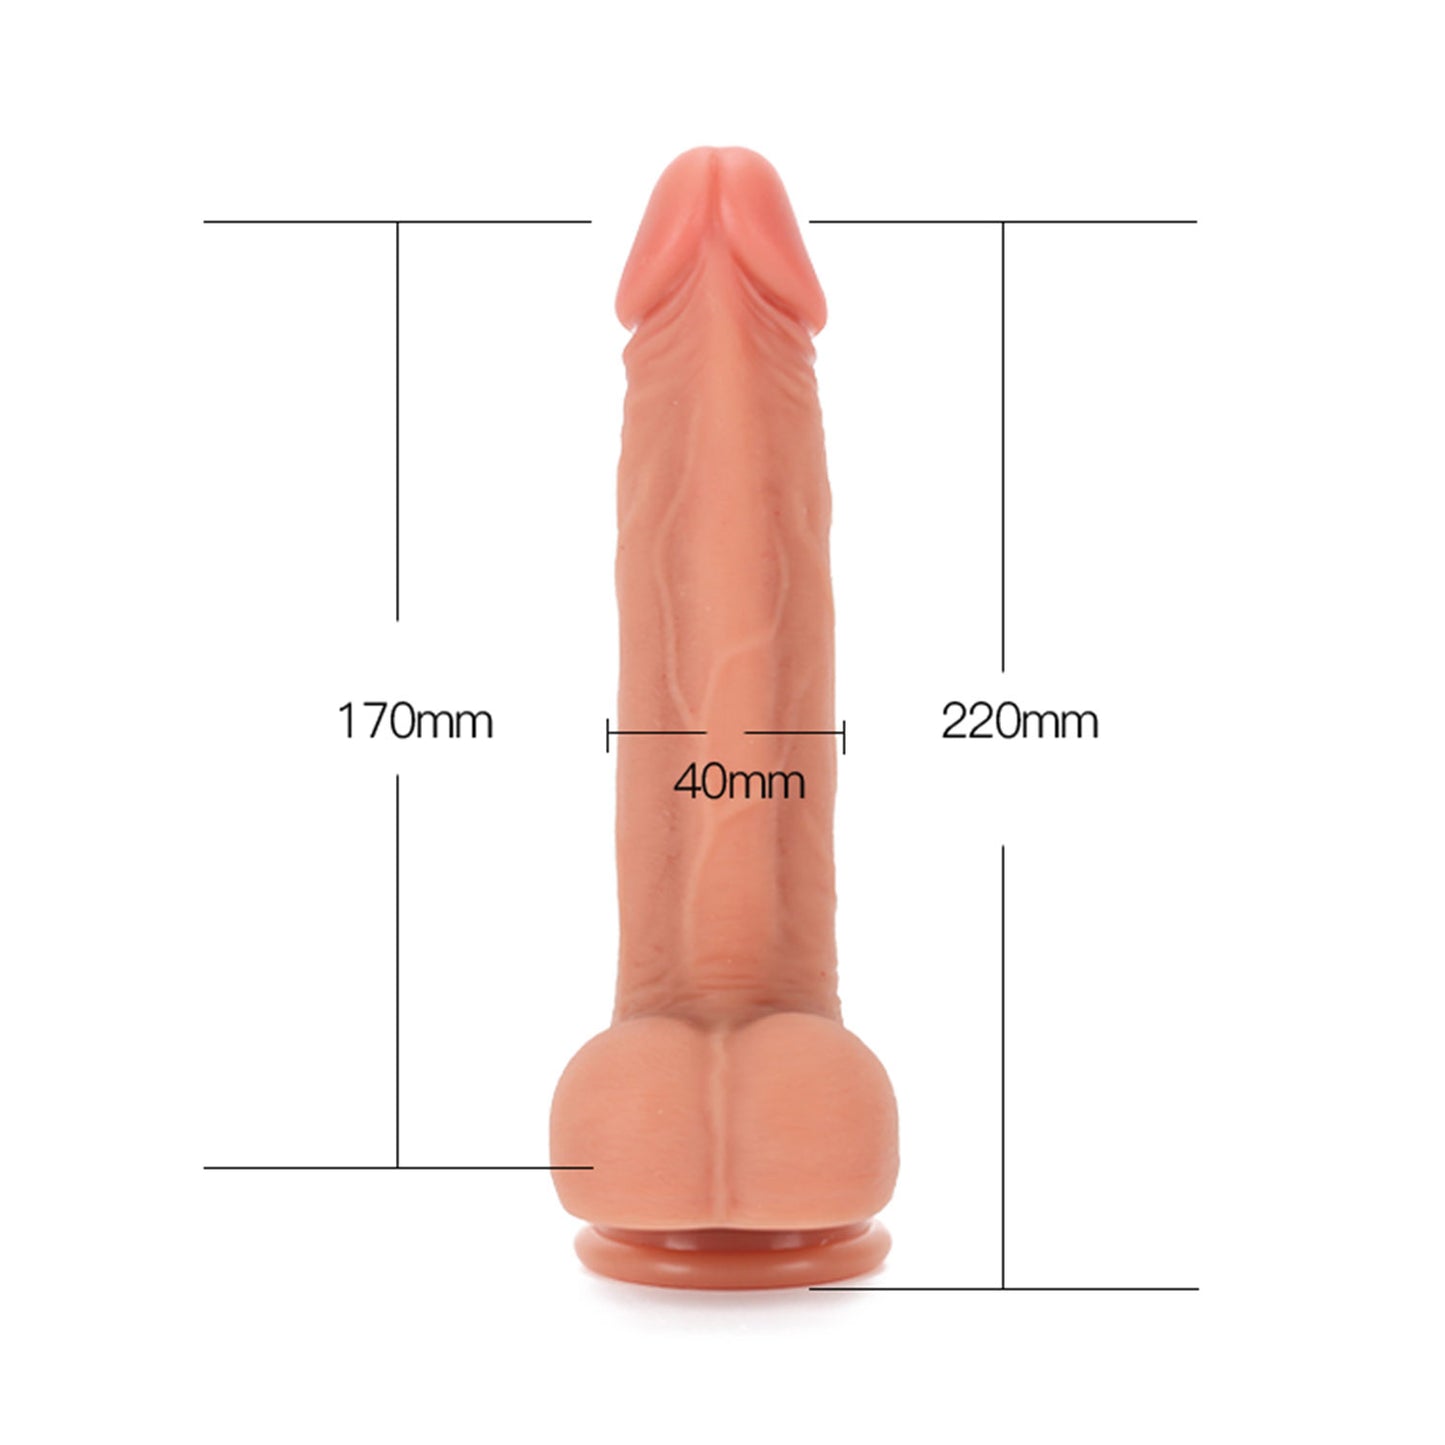 The Horny Company - Damn Realistic Cock 7" Dual Density Silicone Dildo